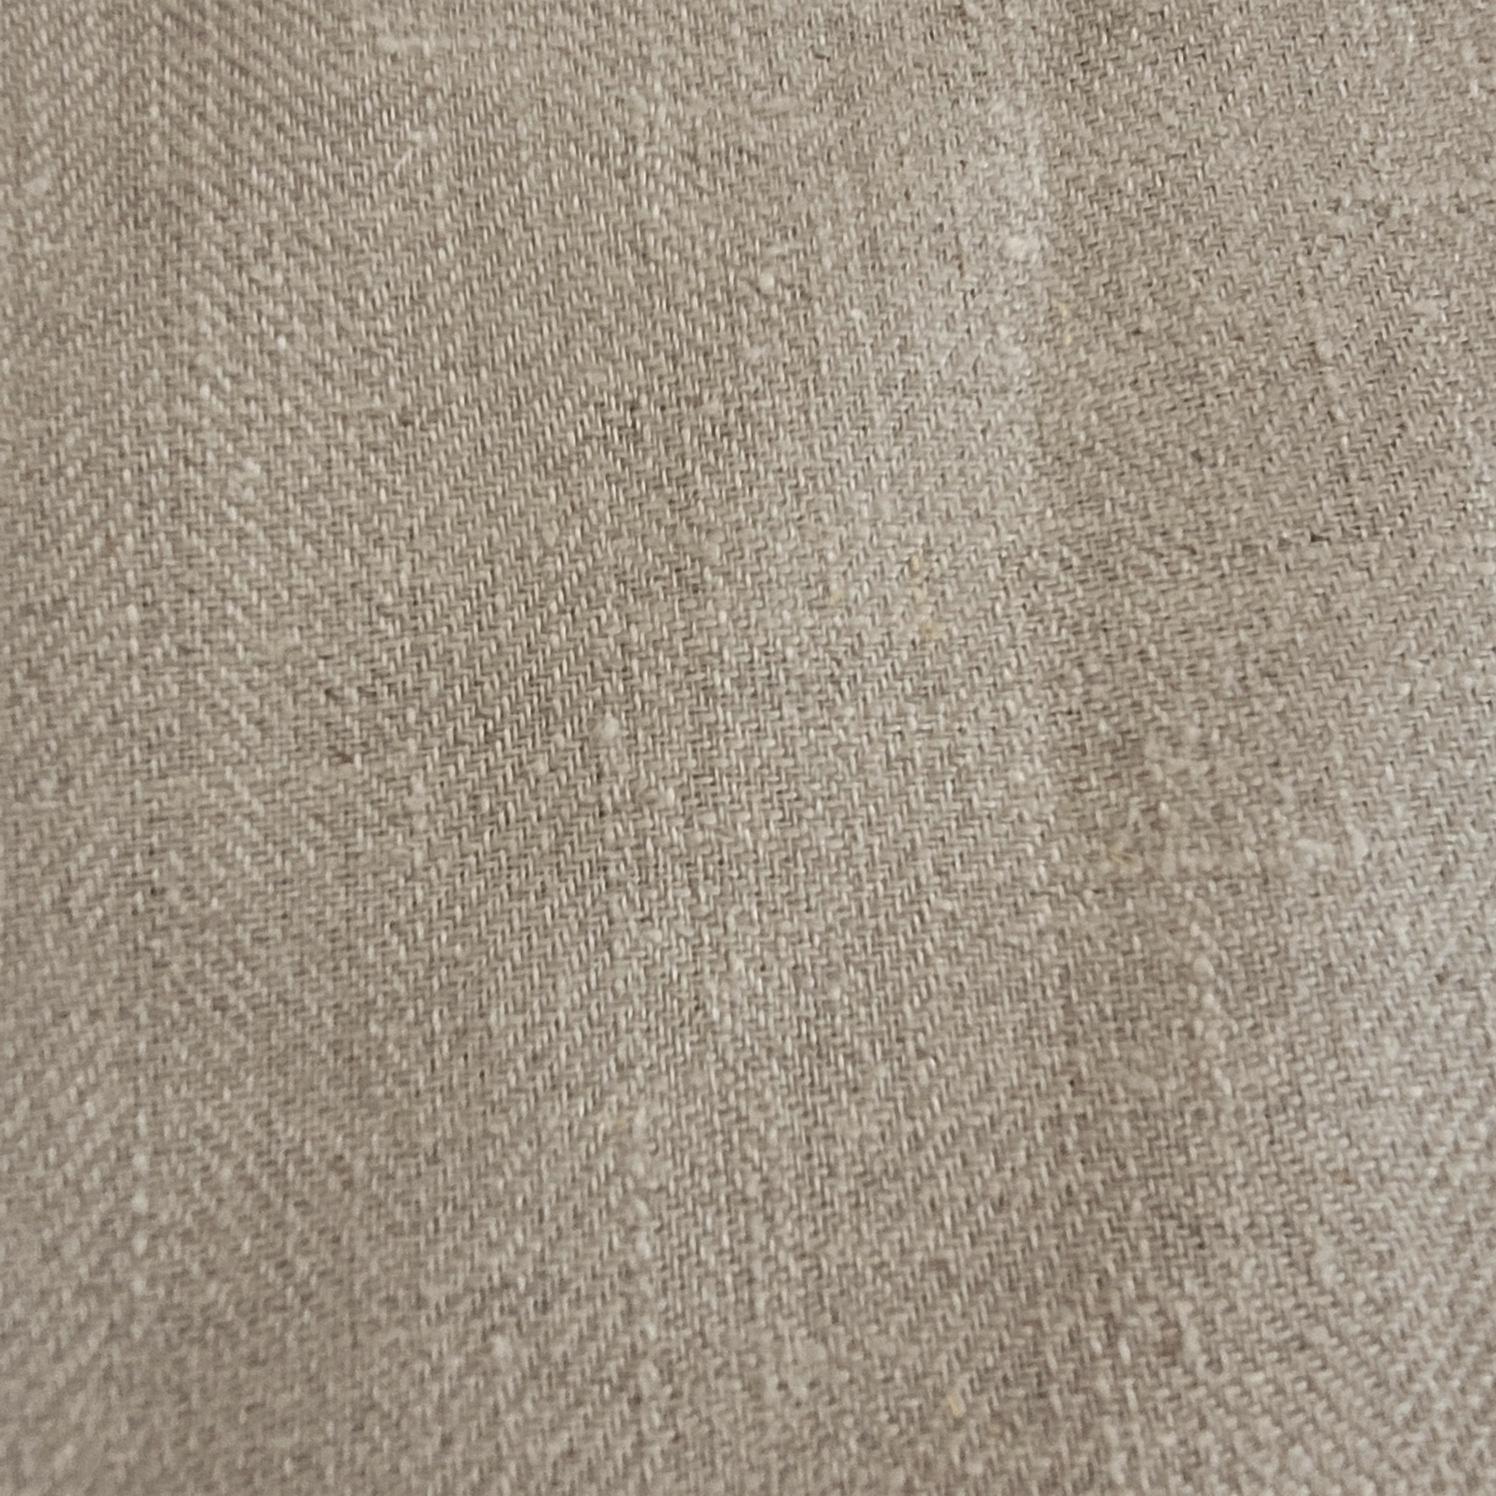 Beige Linen Fabric Prewashed Twill - Linen fabric - LinenMe